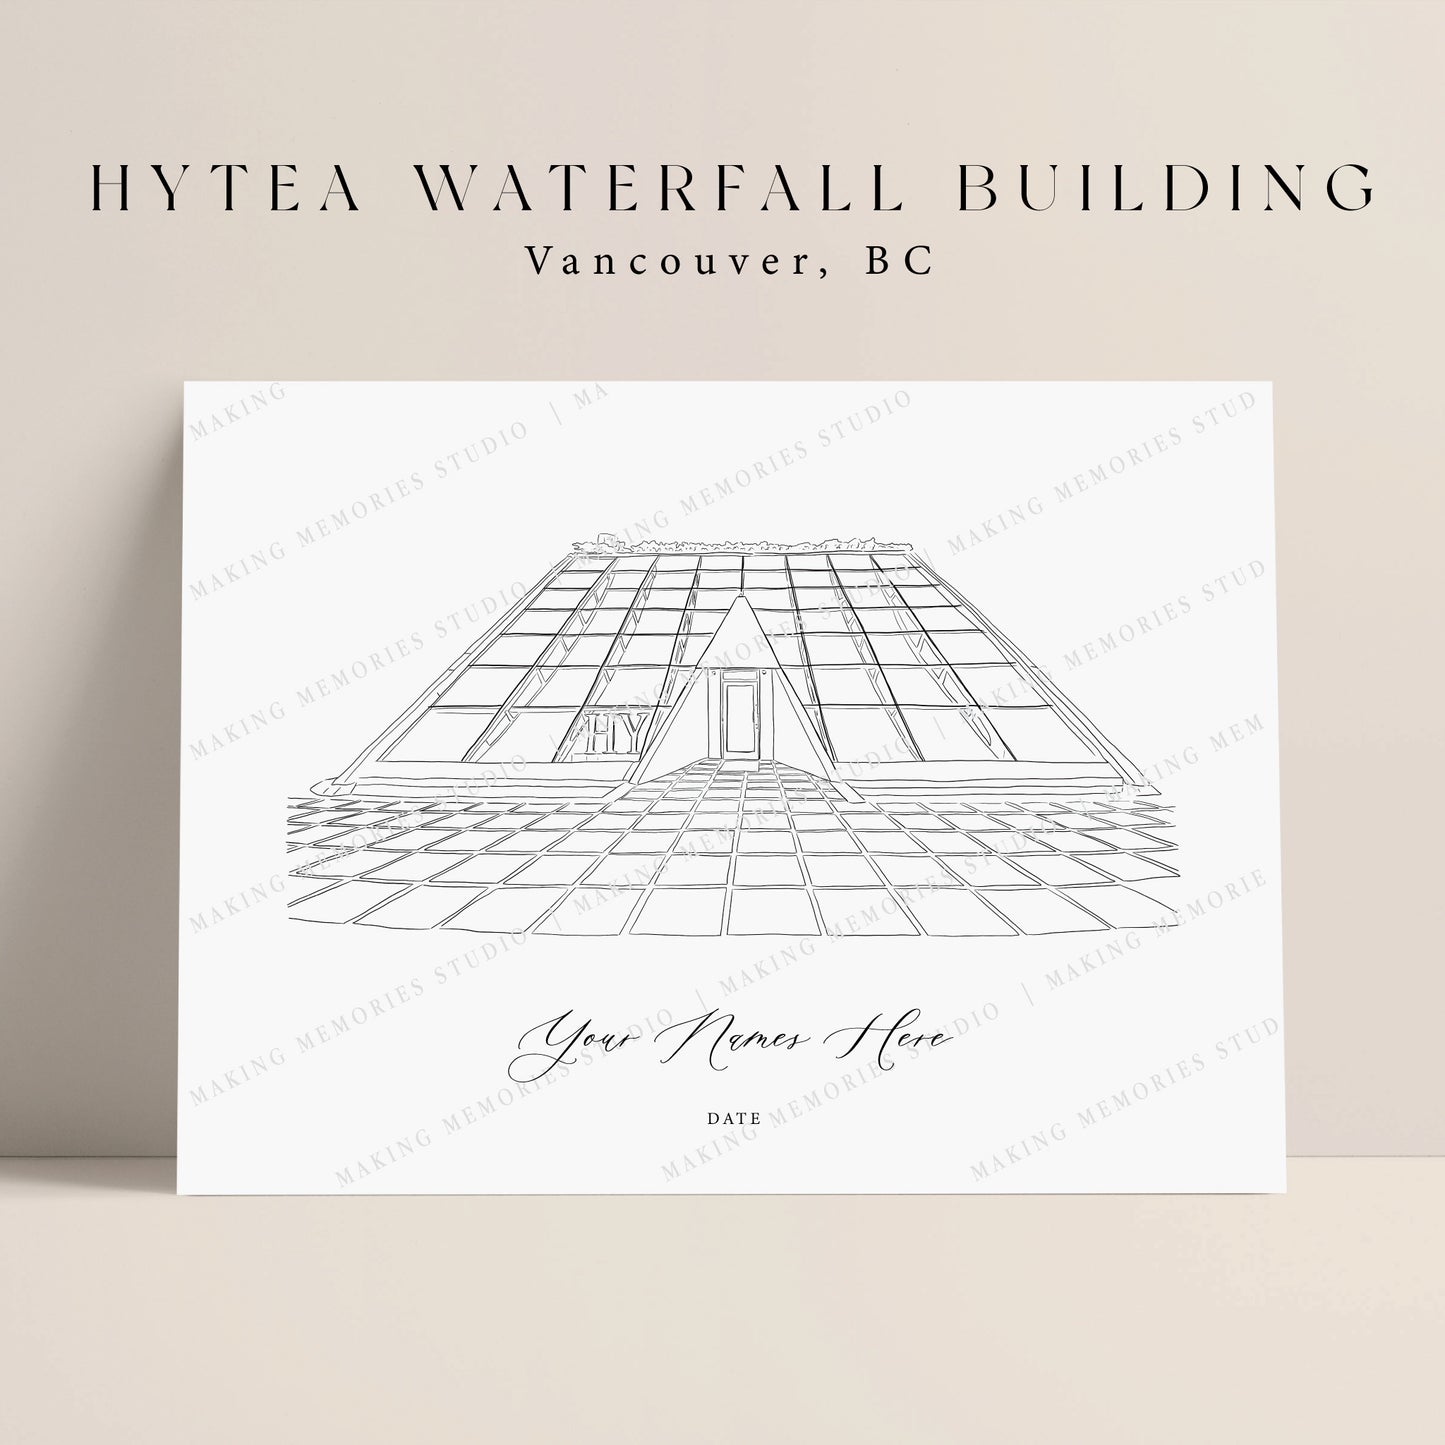 Hytea Waterfall Building